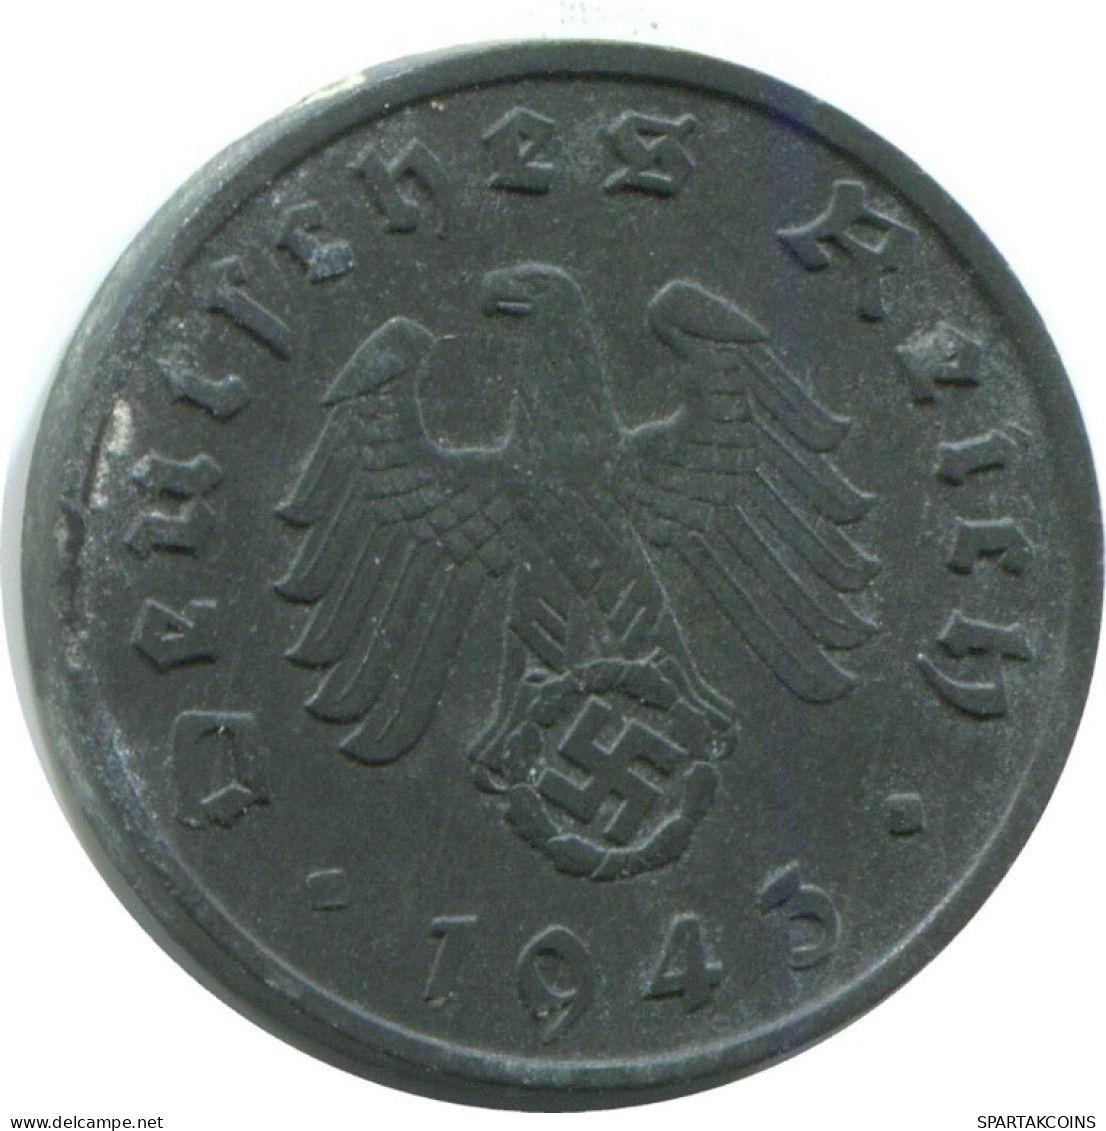 1 REICHSPFENNIG 1943 A ALEMANIA Moneda GERMANY #AE260.E.A - 1 Reichspfennig